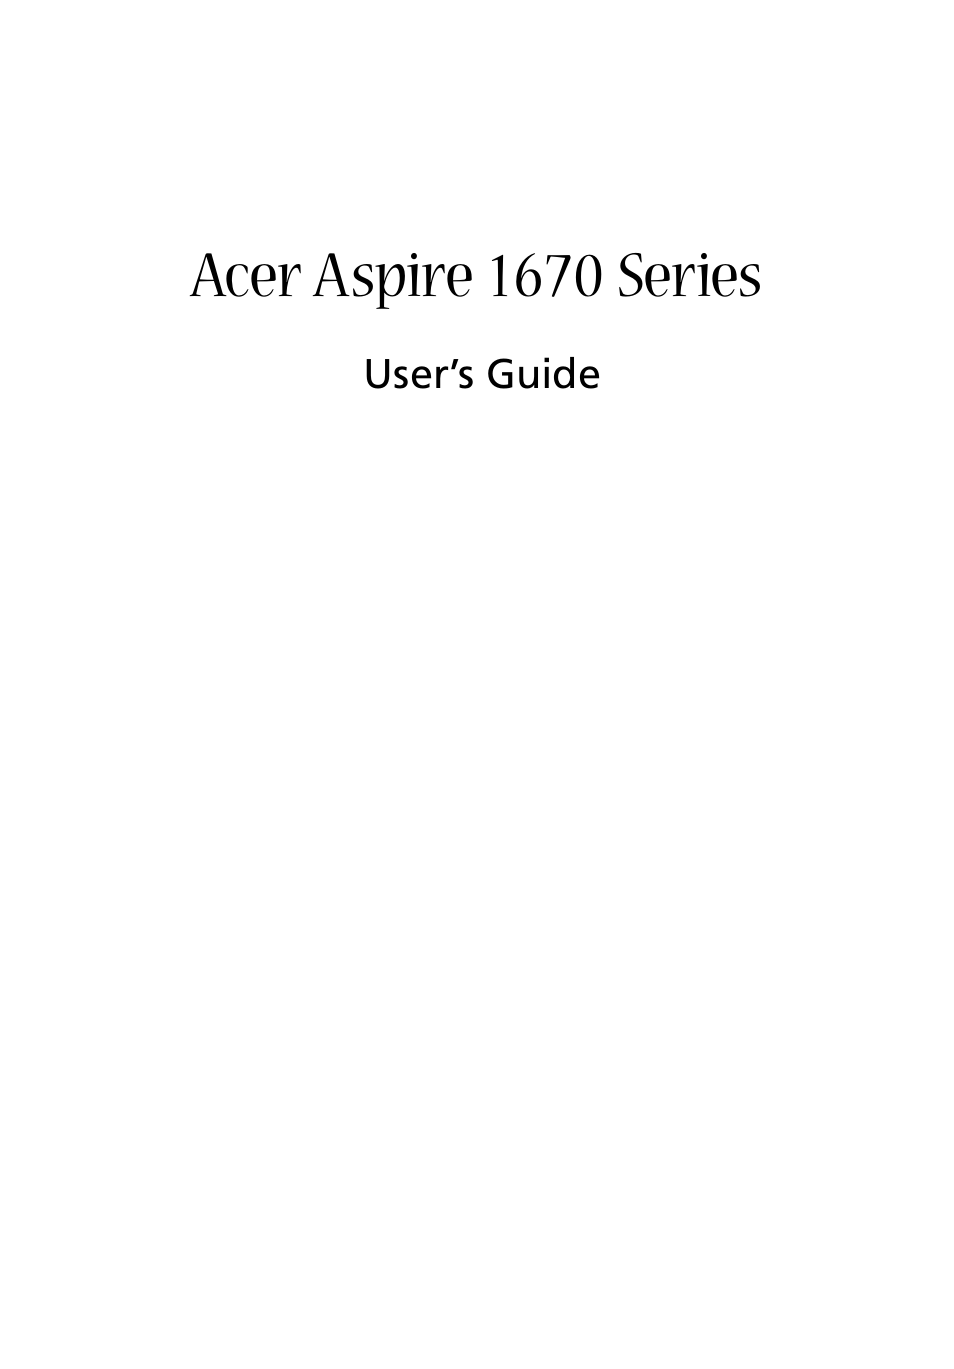 Aspire 1670